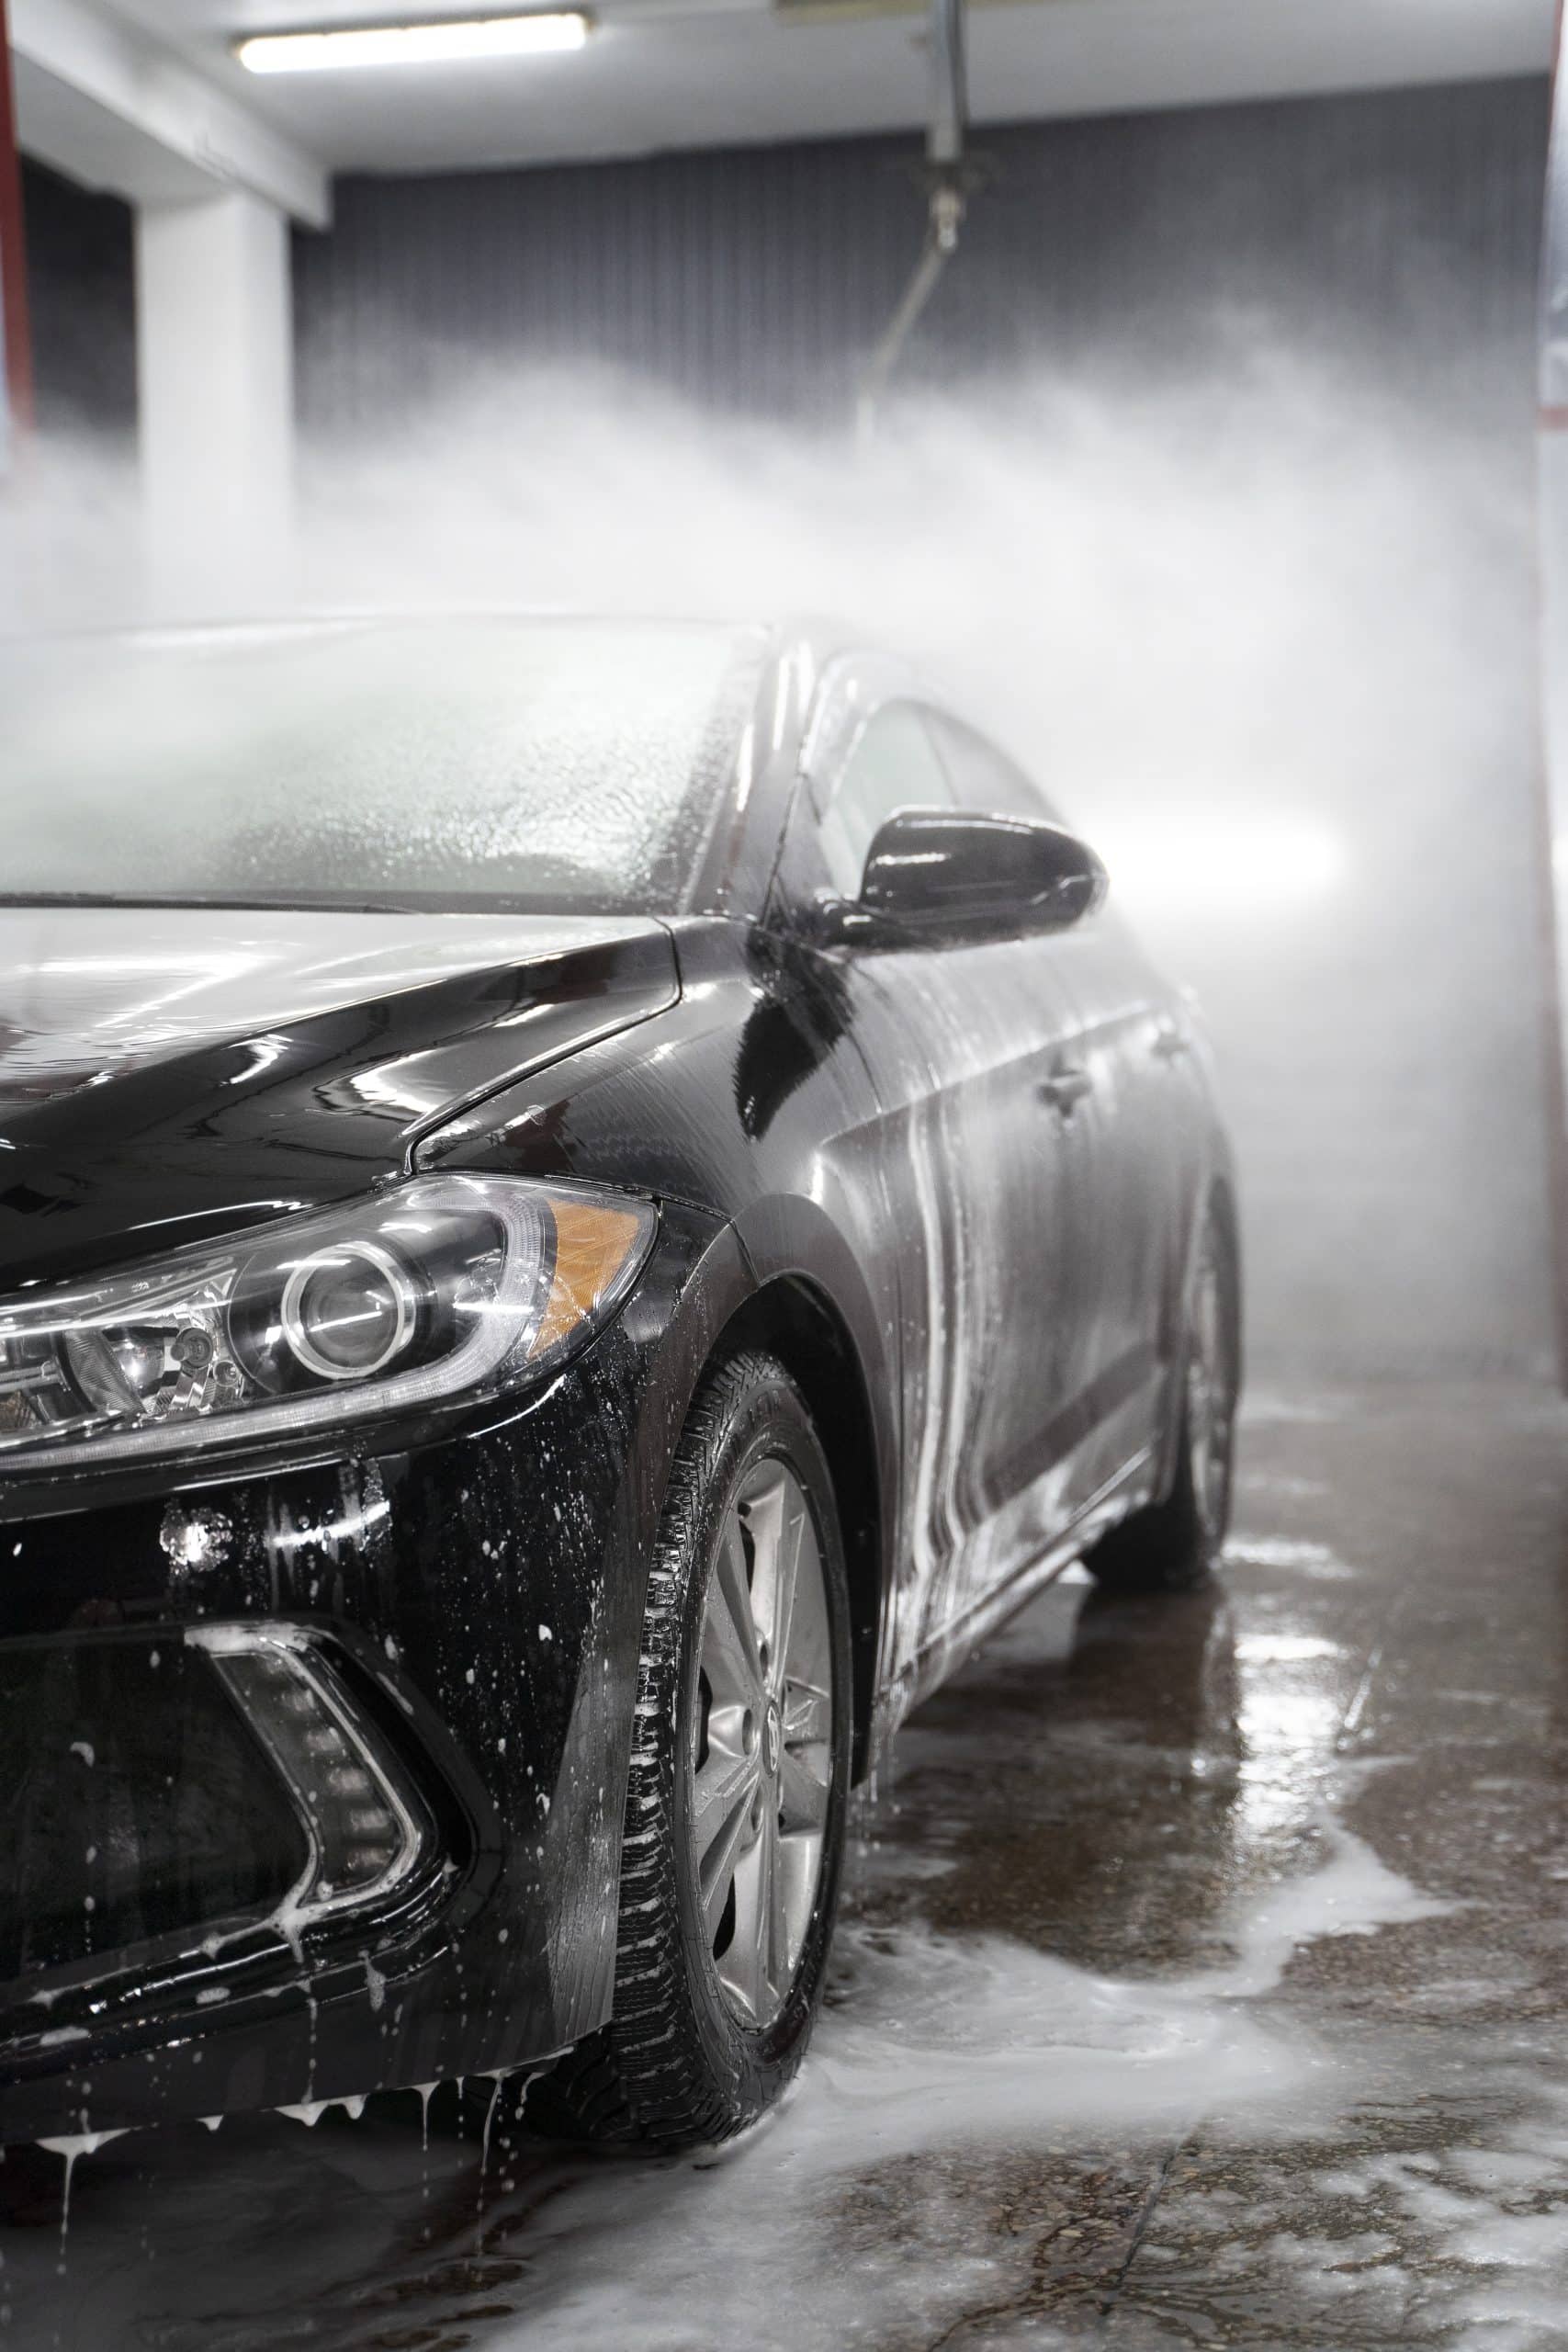 A car receiving a high-pressure foam wash in an automated car wash facility.